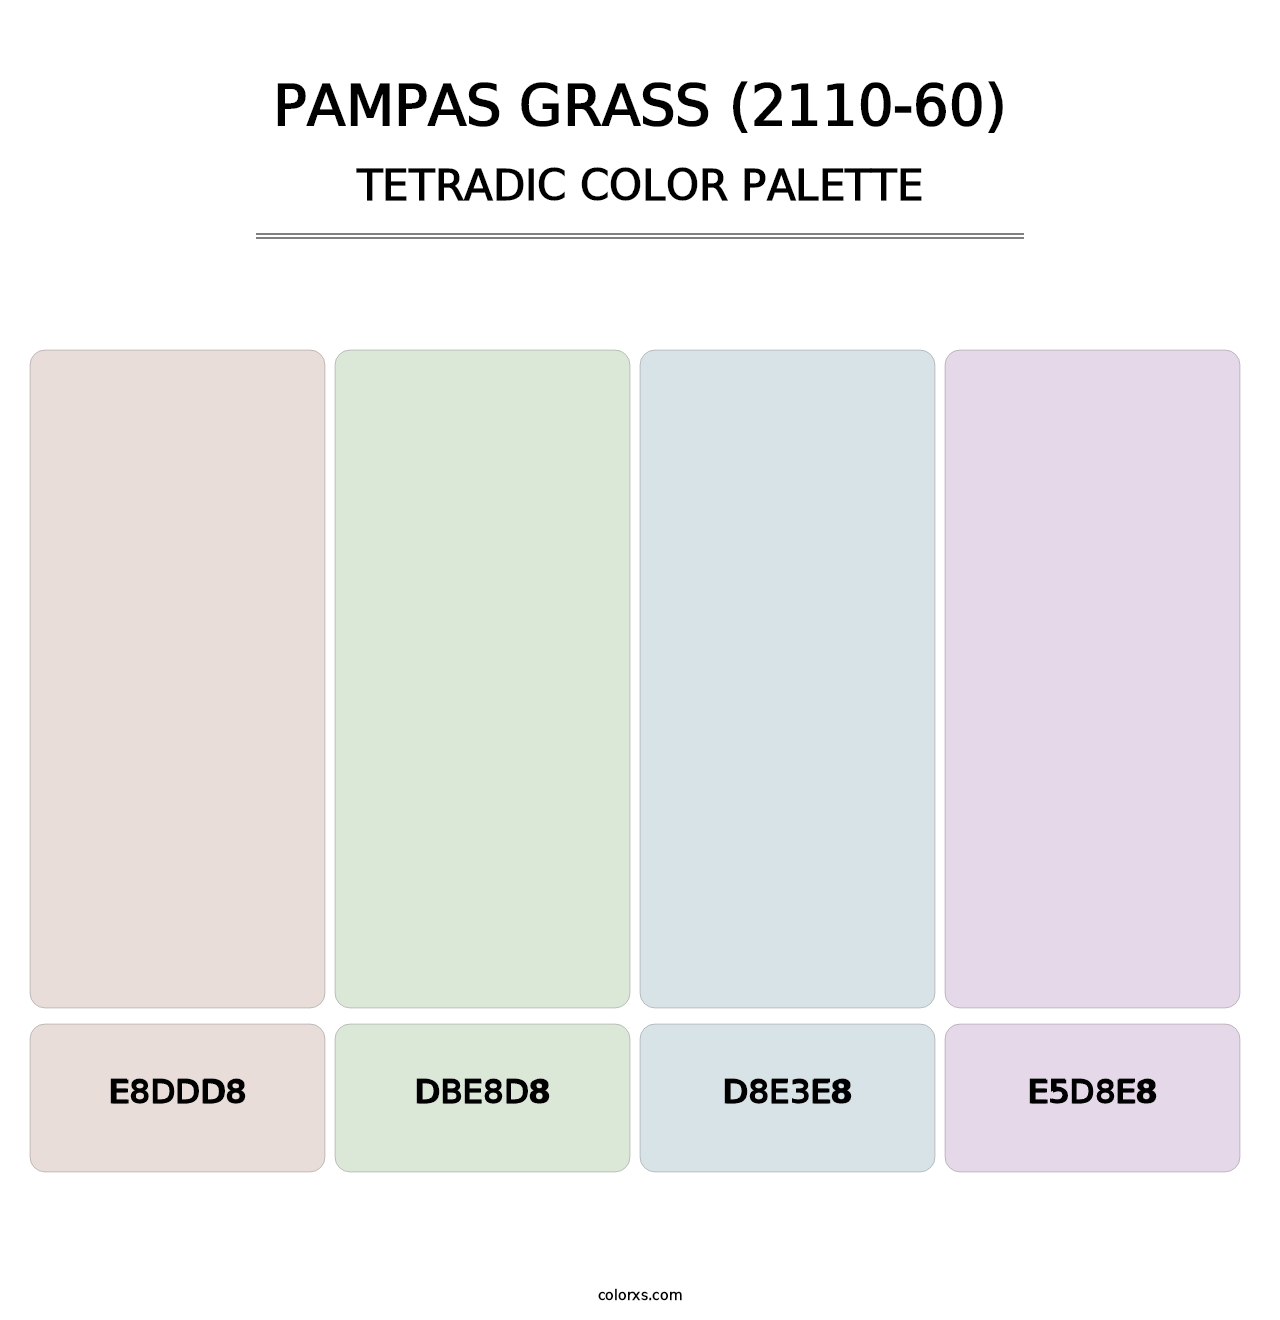 Pampas Grass (2110-60) - Tetradic Color Palette